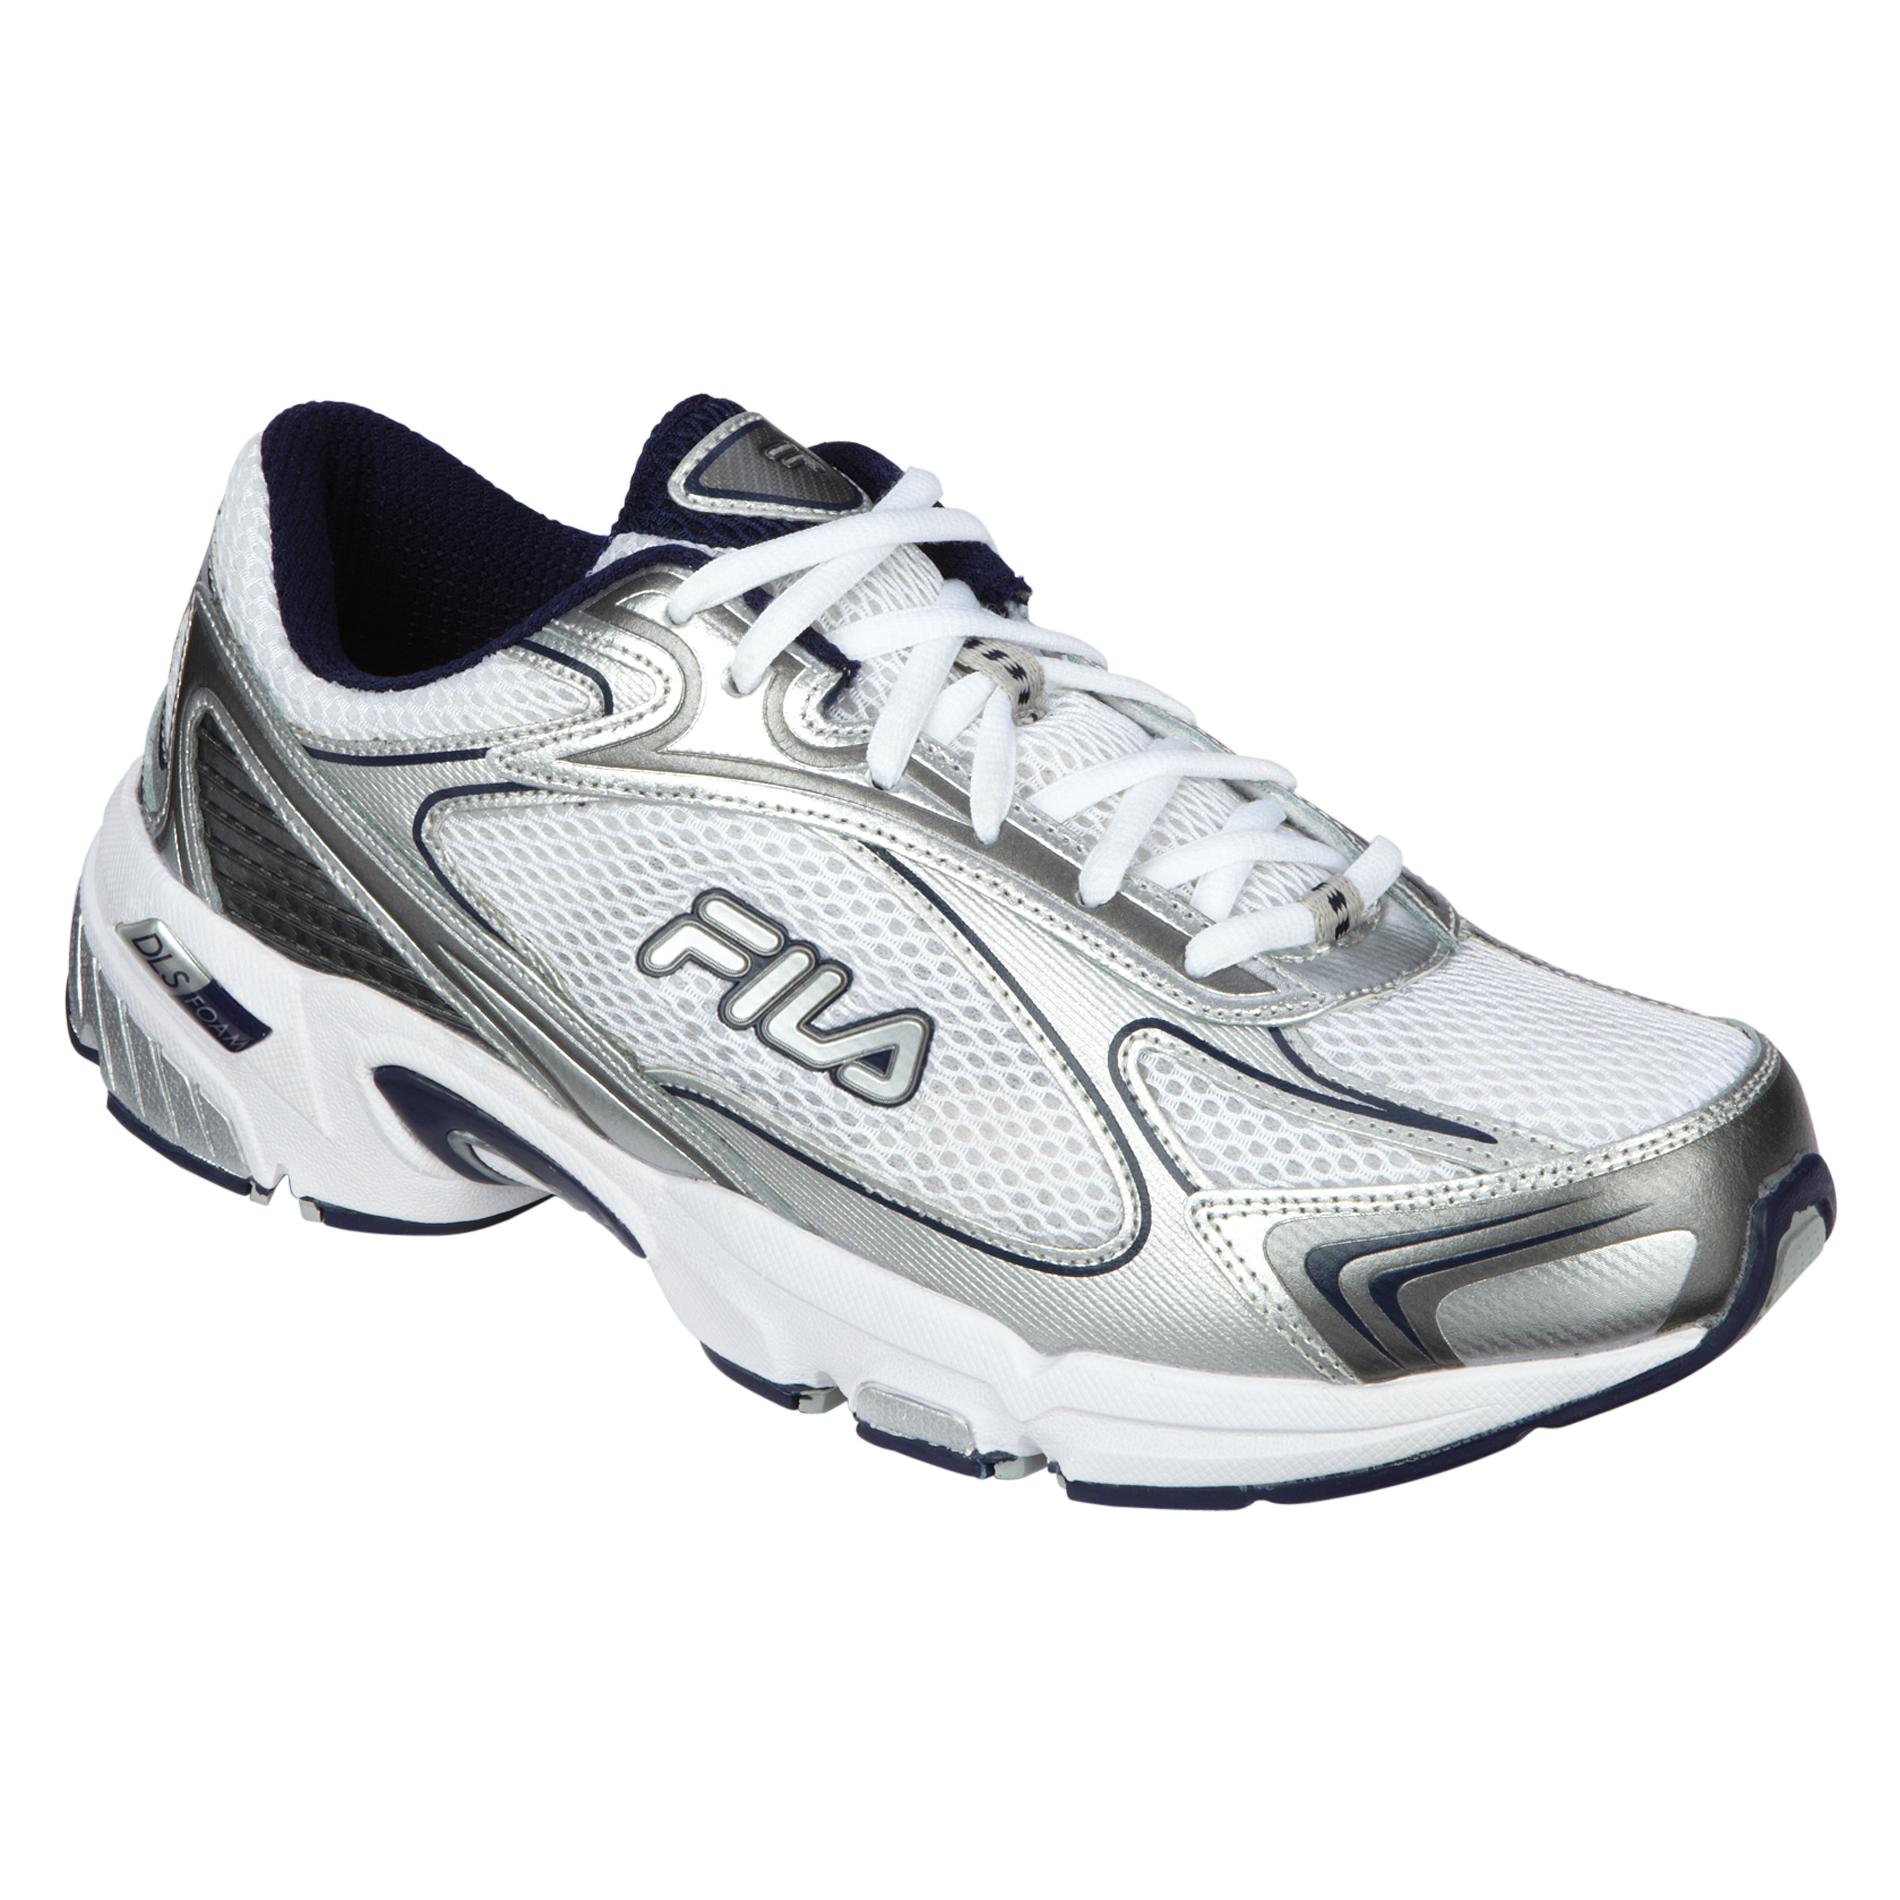 Men's Athletic Shoe DLS Tenacity Wide Width - White